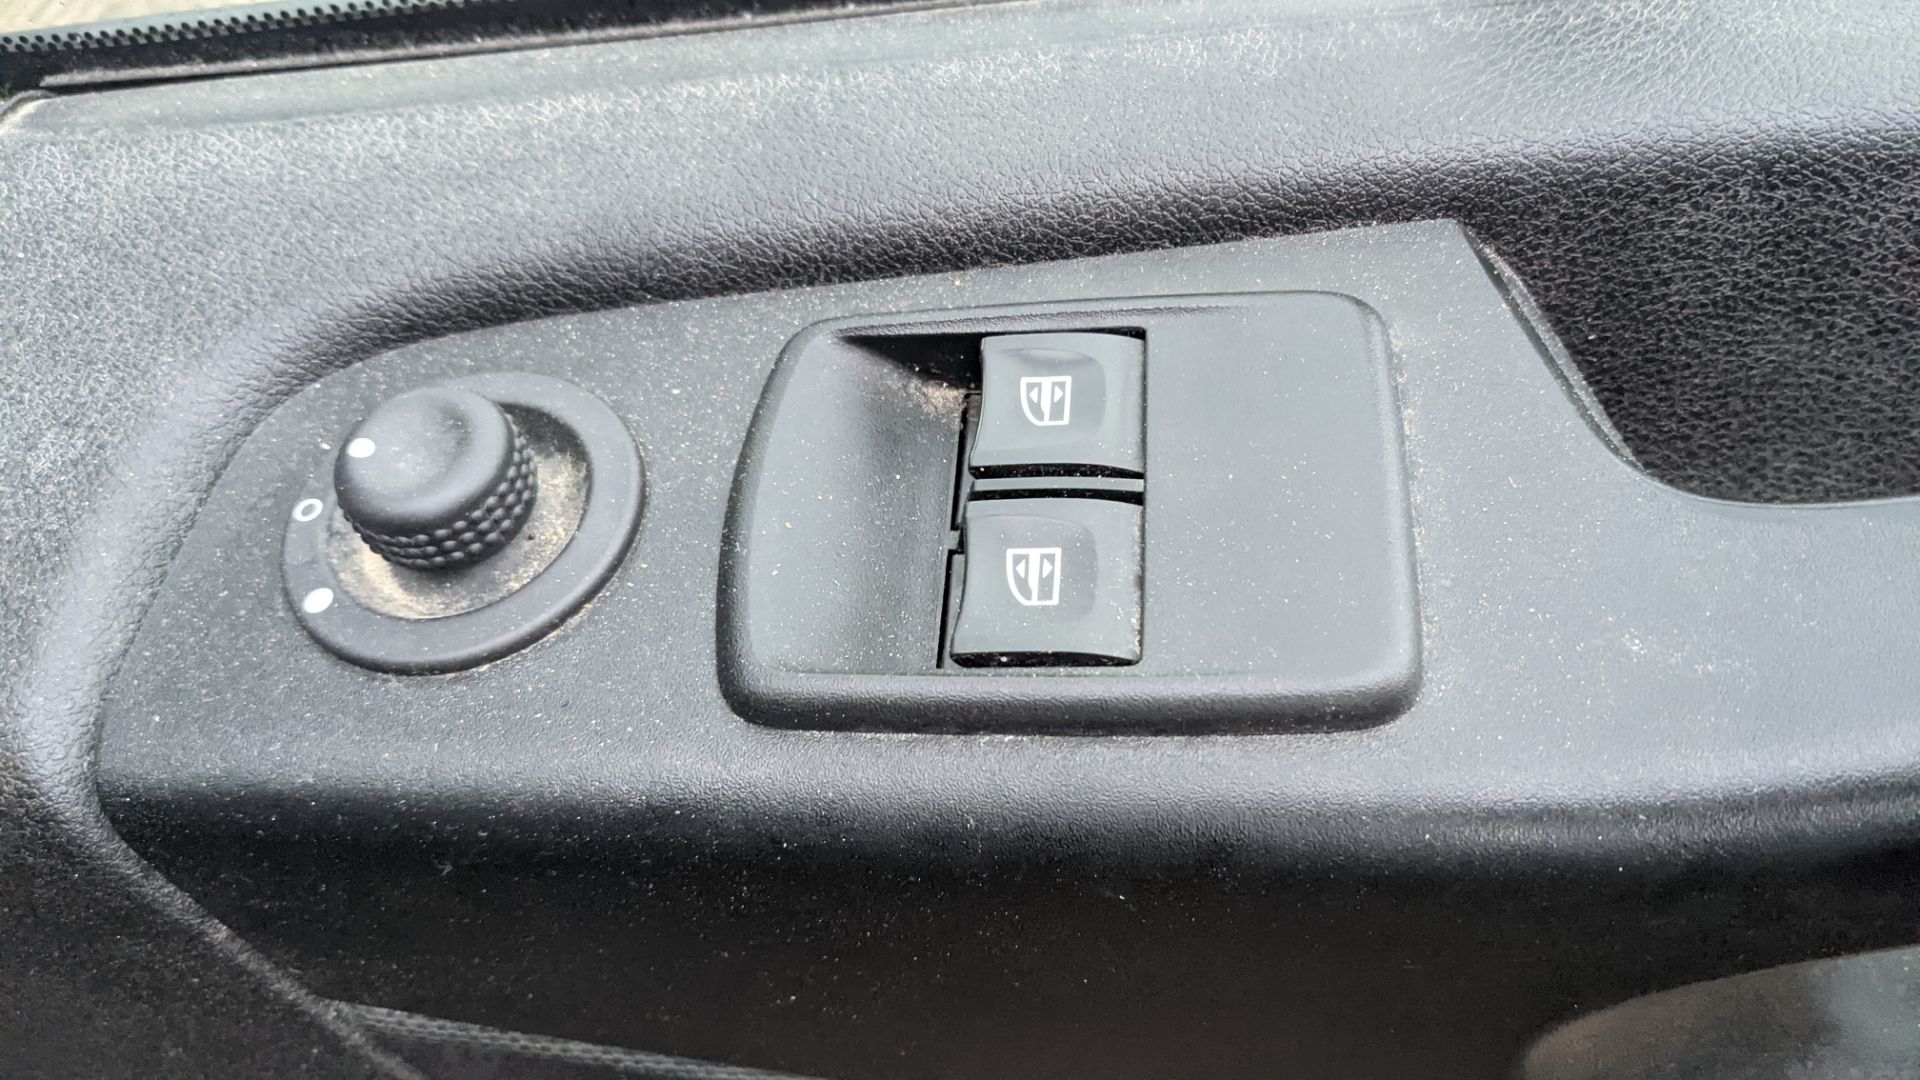 2019 Vauxhall Vivaro L2 2900 Sport CDTI BT SS panel van (Registration FD19 YUB) - Image 36 of 55